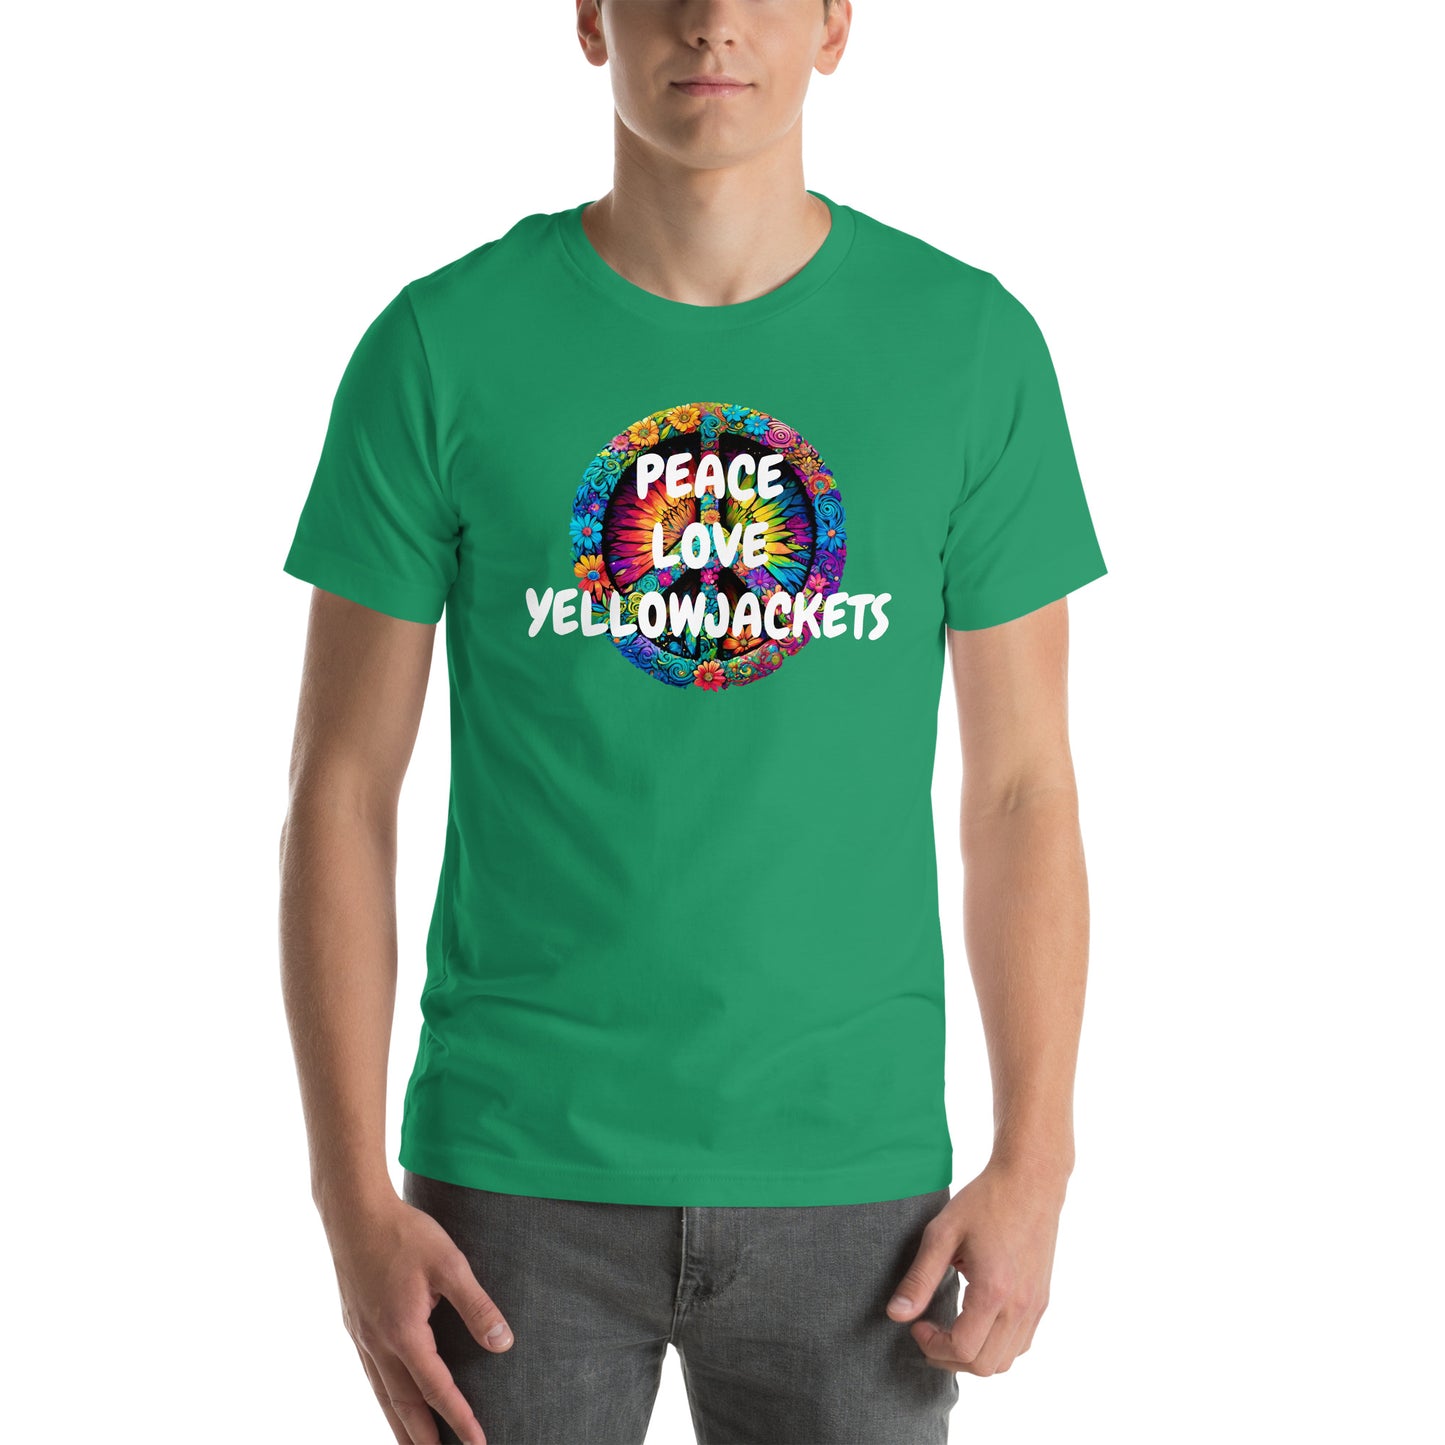 PEACE & LOVE YELLOWJACKETS Unisex t-shirt